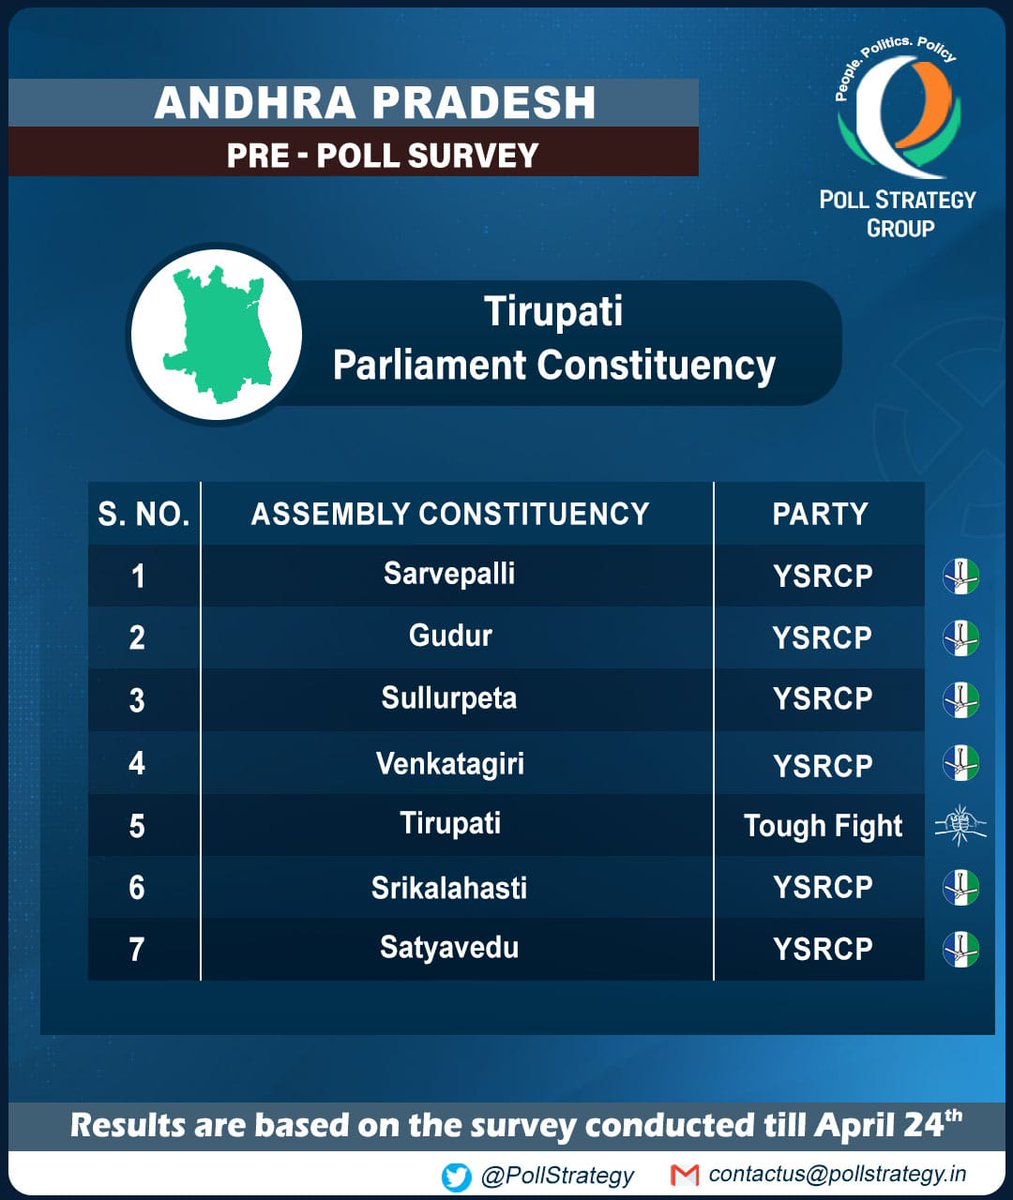 Tirupati Parliament Constituency: Pre-poll prediction 

- YSRCP is winning 6/7 Constituencies from Tirupati PC
- A tough contest will be seen between TDP alliance & YSRCP party in Tirupati AC

#Sarvepalli #Gudur #Sullurpeta #Venkatagiri #Tirupati #Srikalahasti #Satyavedu…